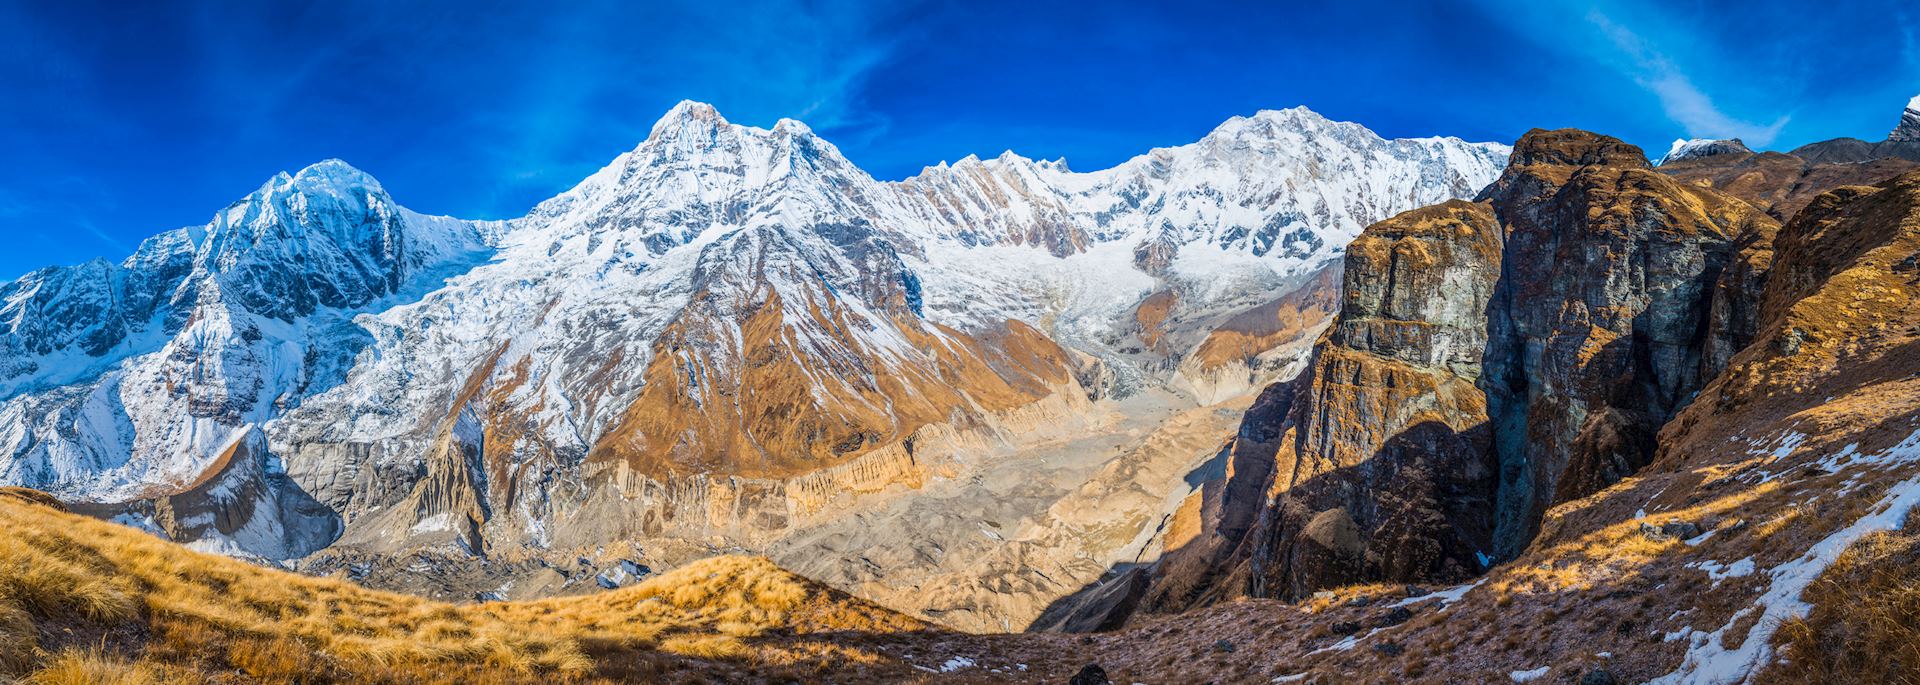 The Annapurna range in Nepal